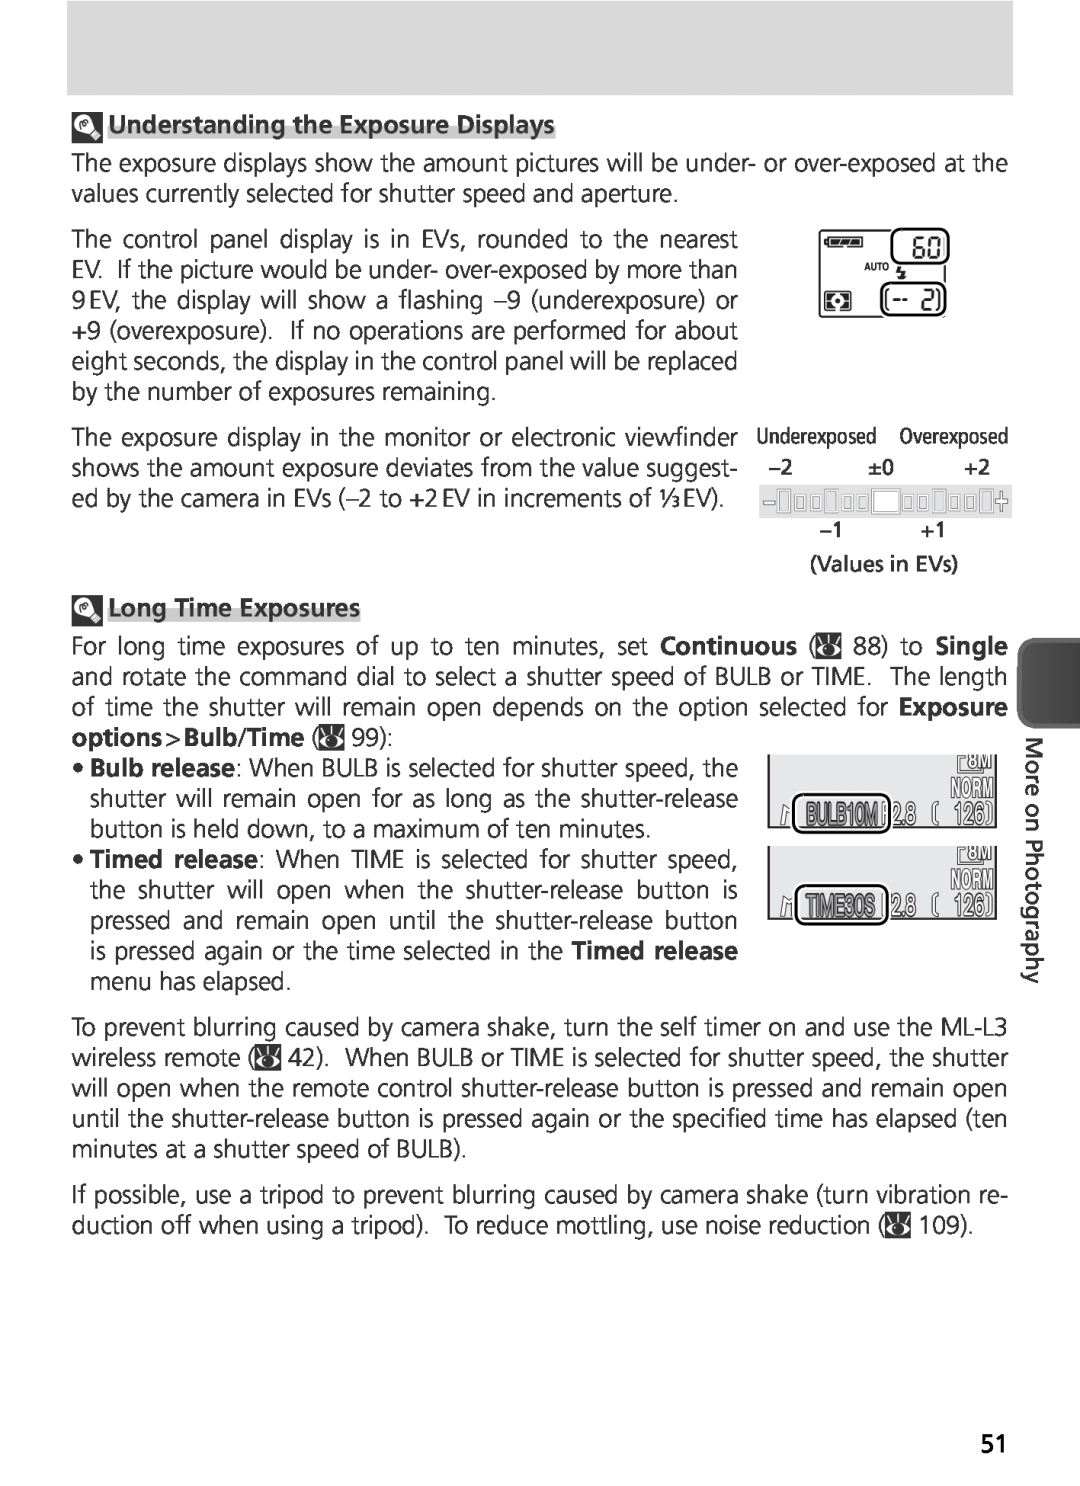 Nikon COOLPIX8800 manual BULB10MF2.8, TIME30S F2.8, Understanding the Exposure Displays, Long Time Exposures 